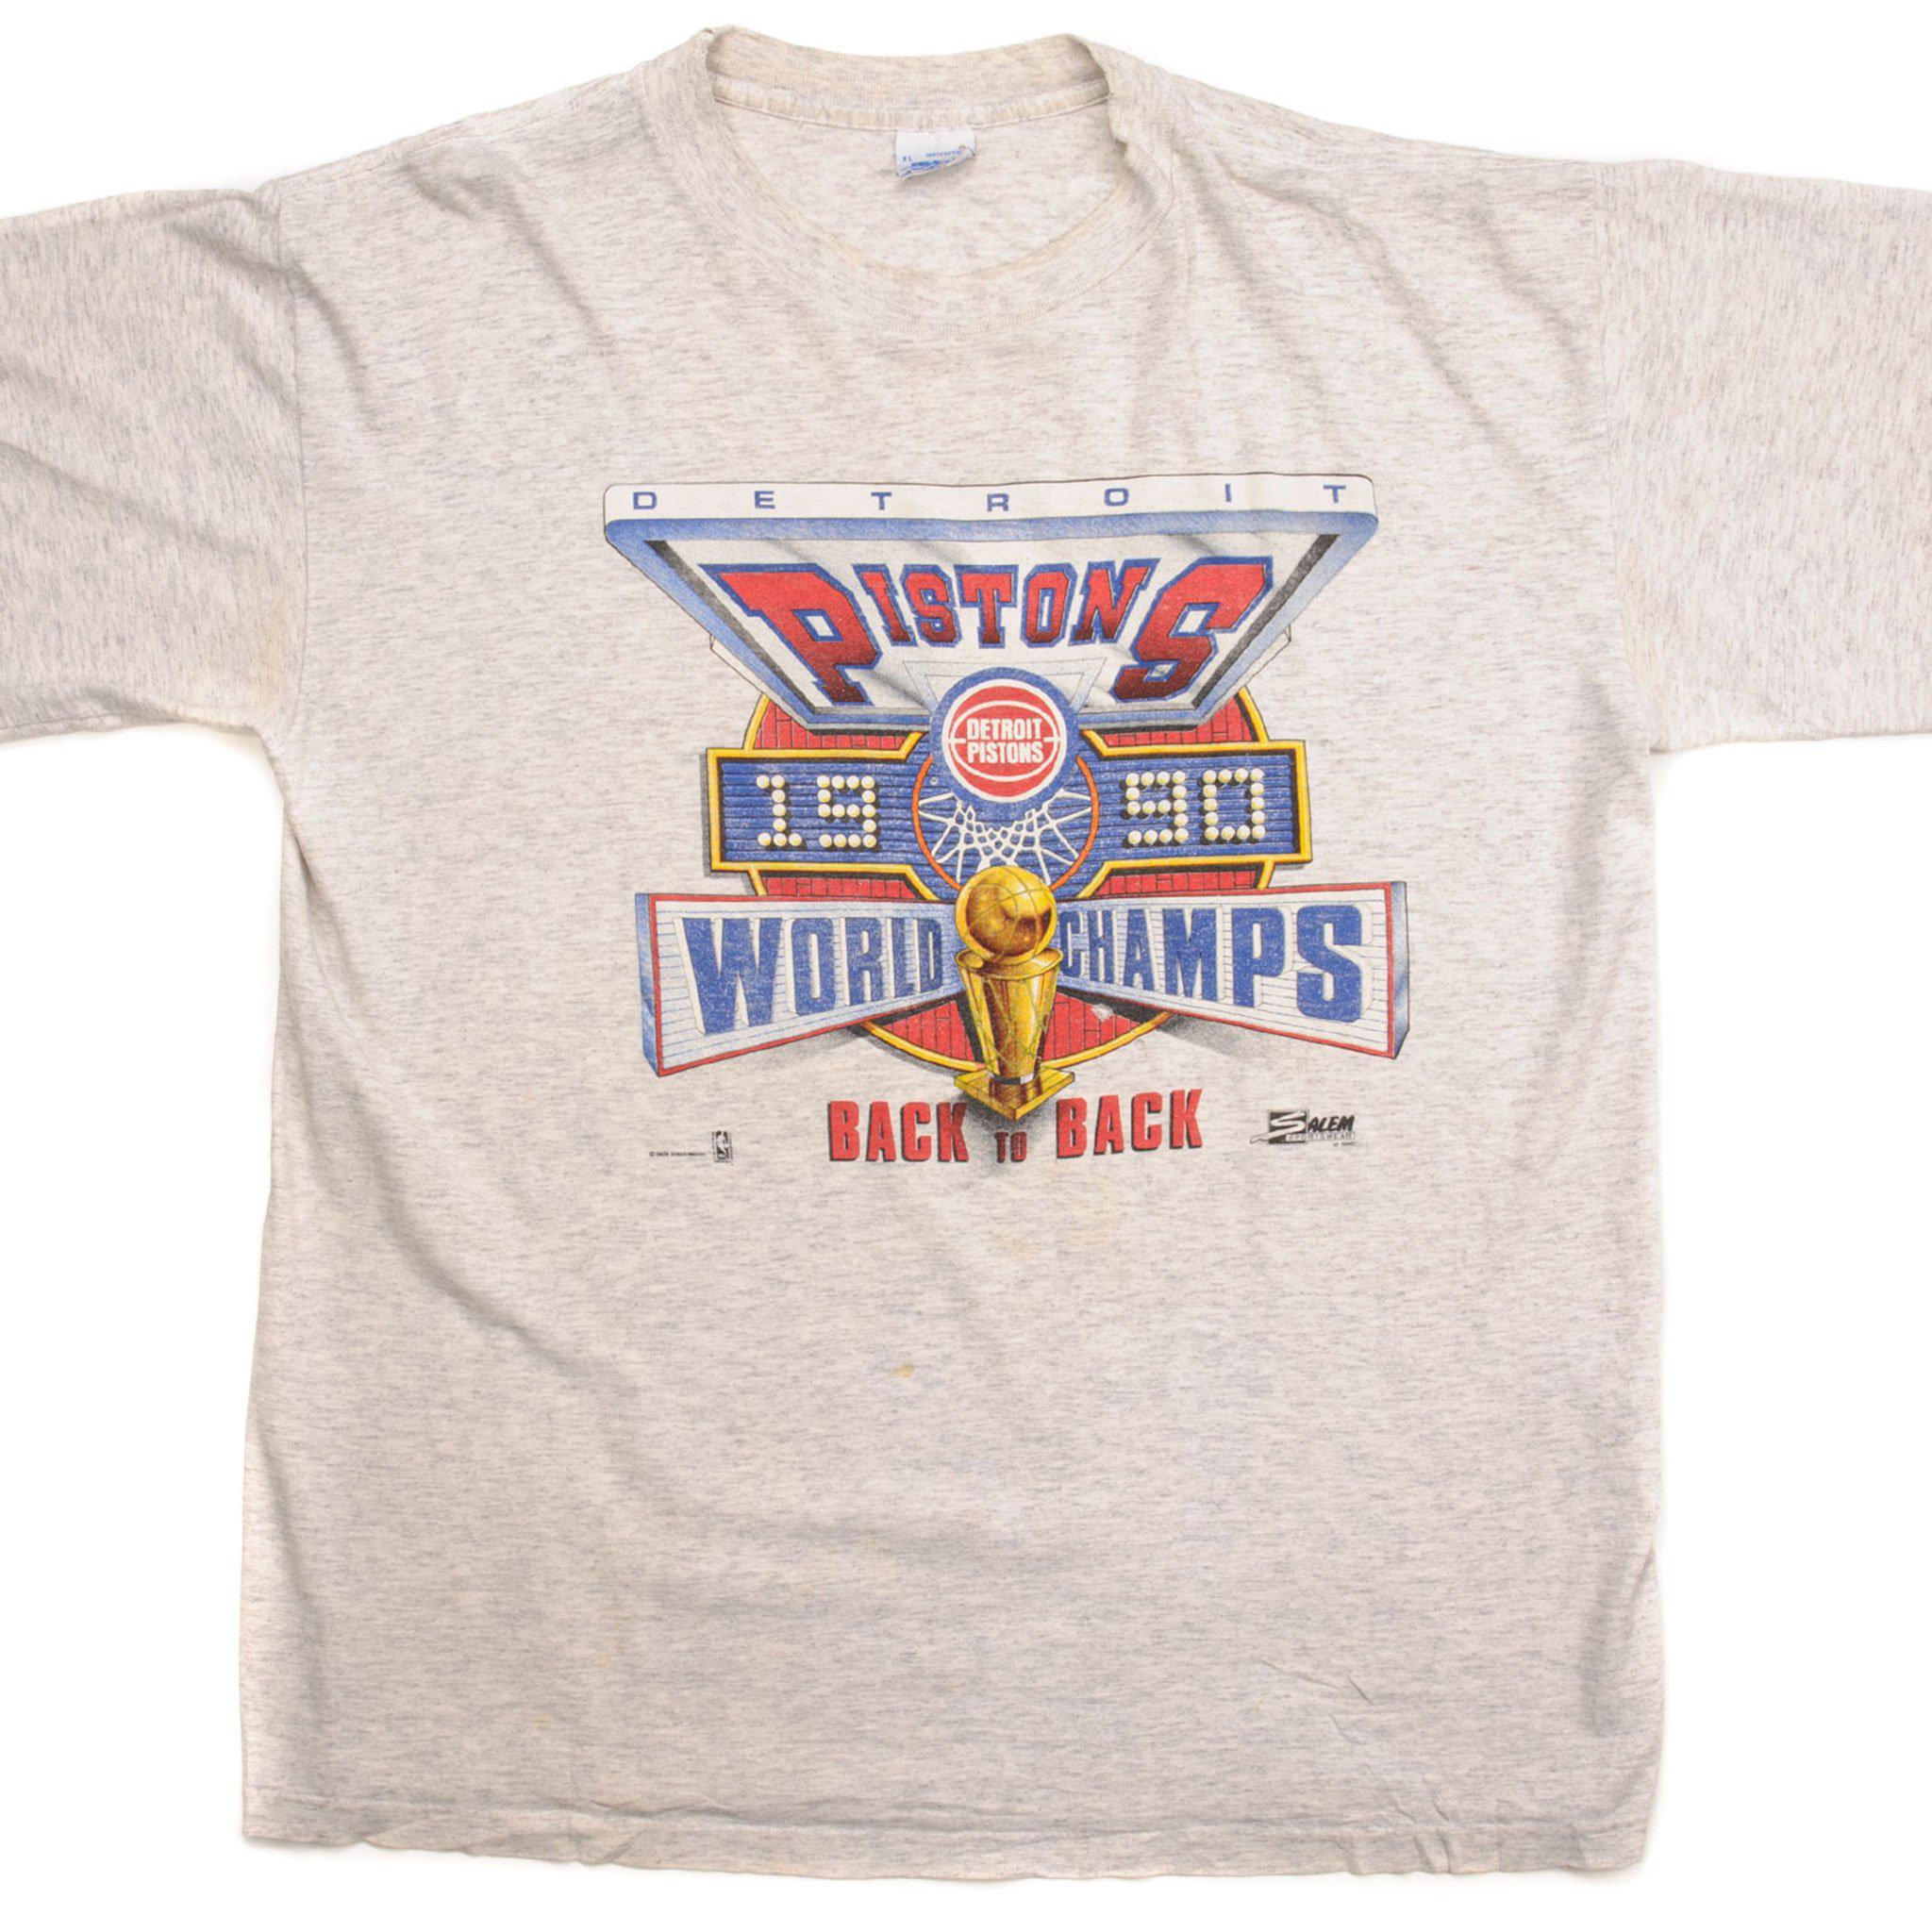 Detroit Pistons 66th Anniversary Thomas And Dumars T Shirt - Growkoc